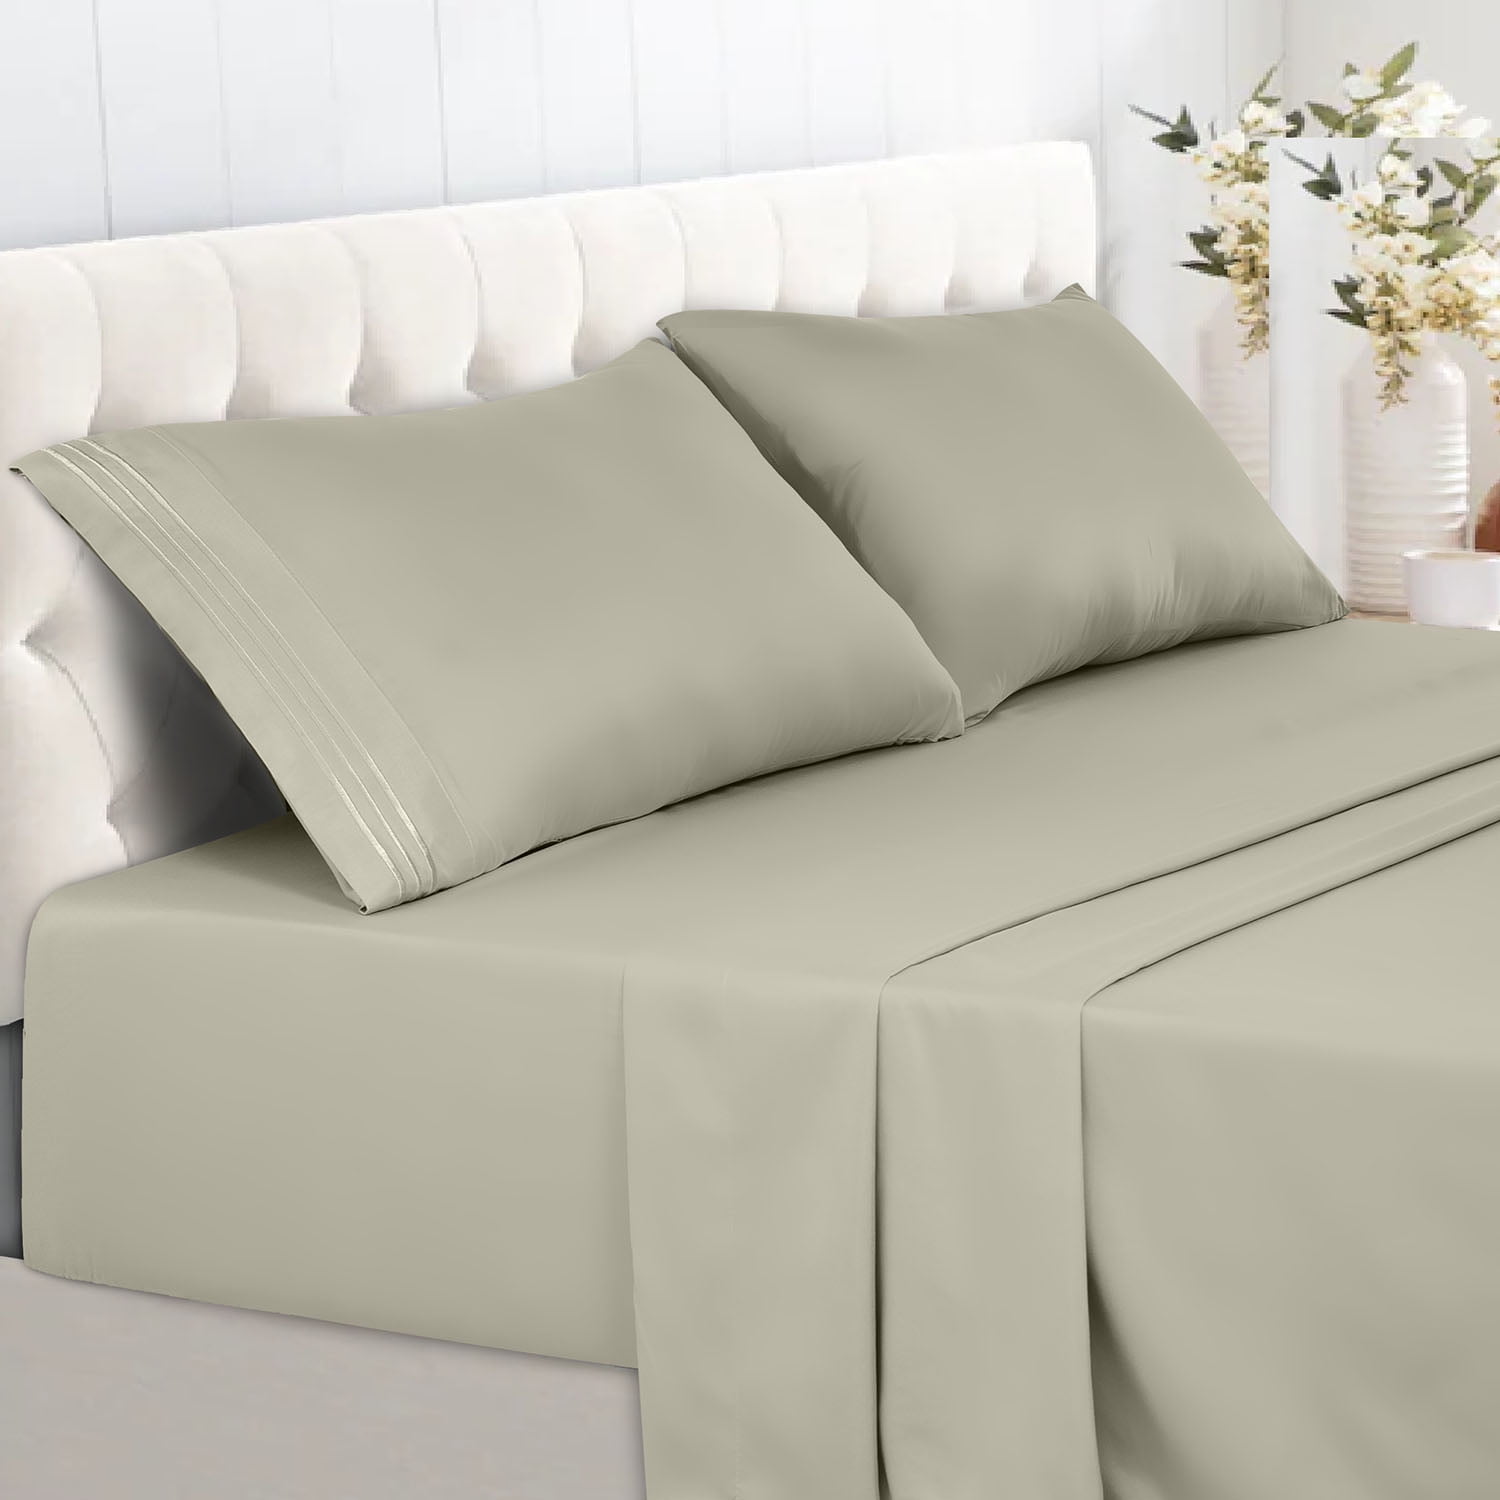 Details about   Limited Time Sale Sheet Set 100% Cotton Sheet Set Luxury Bedding Sheets Set 